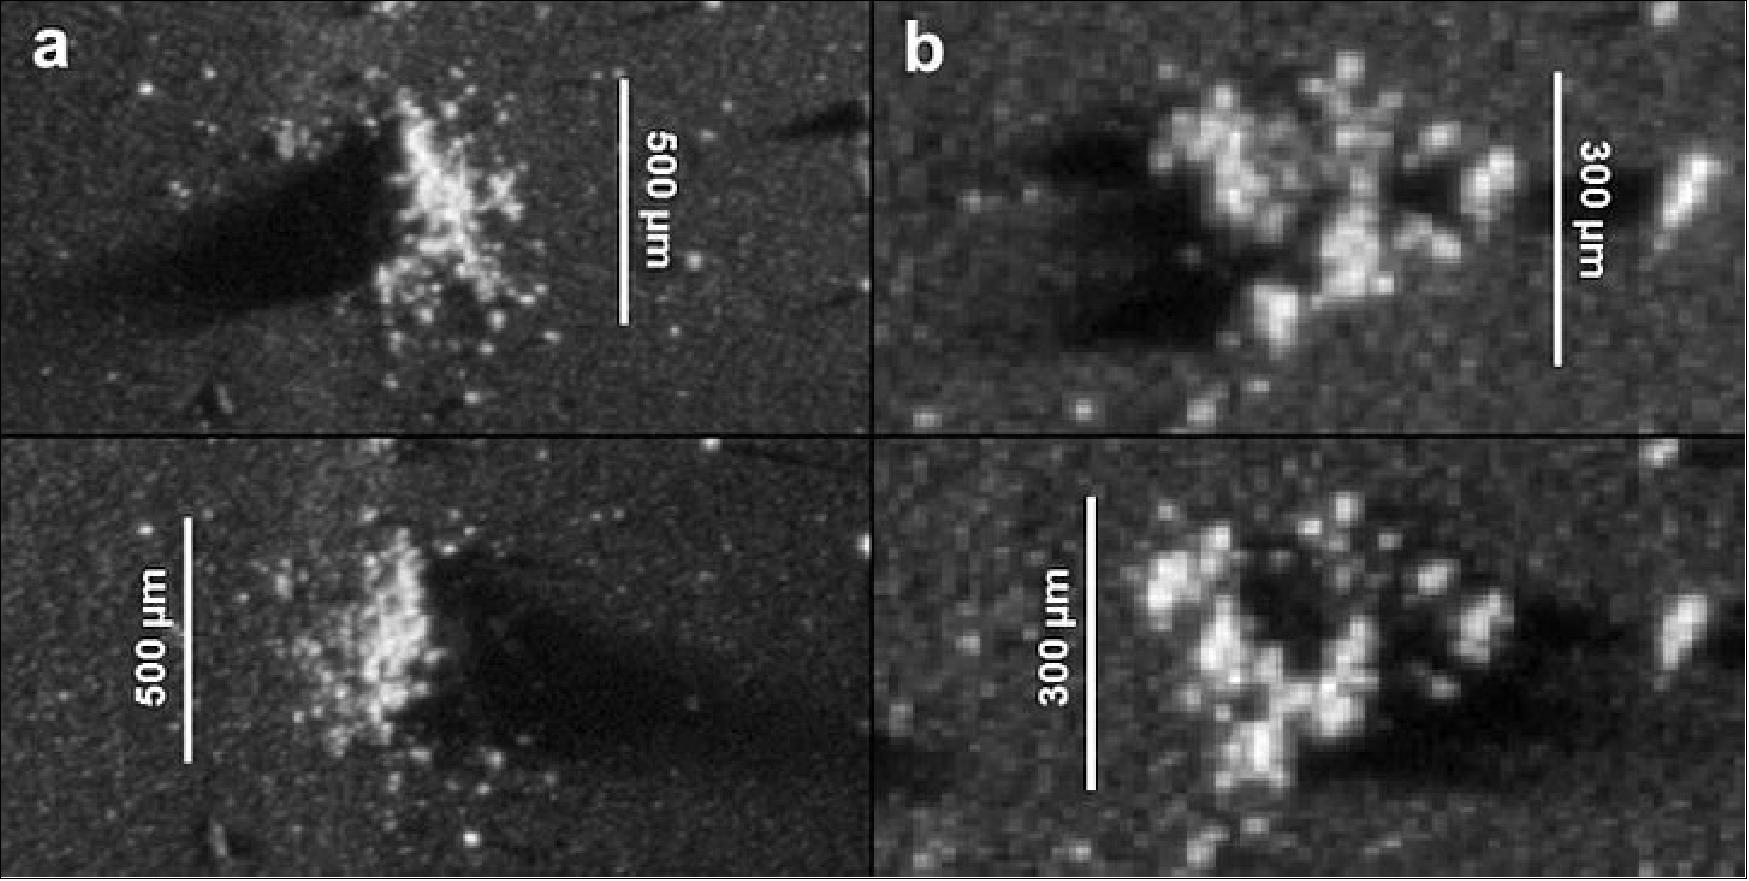 Figure 147: Dust grains from comet 67P/Churyumov-Gerasimenko (image credit: ESA/Rosetta/MPS for COSIMA Team MPS/CSNSM/UNIBW/TUORLA/IWF/IAS/ESA/BUW/MPE/LPC2E/LCM/FMI/UTU/LISA/UOFC/vH&S)